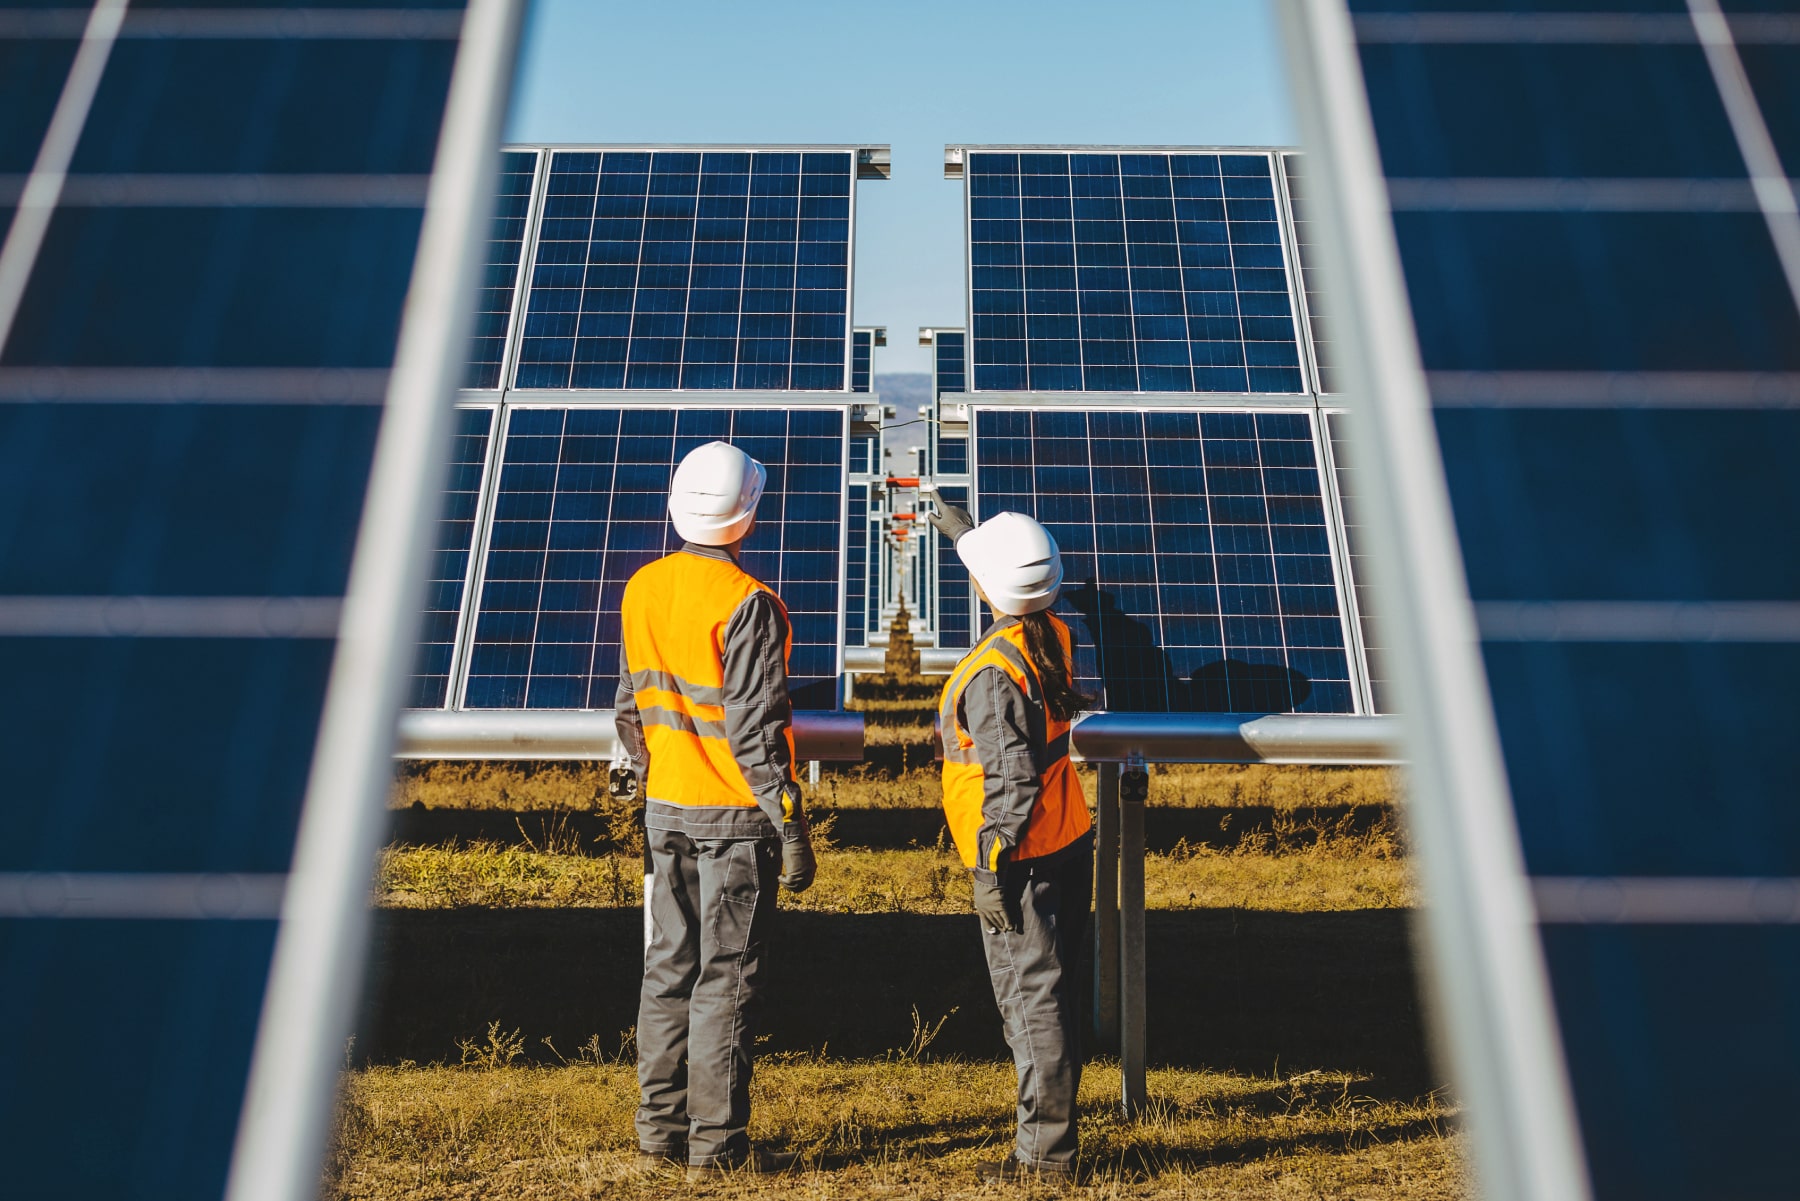 An image of workmen on a solar farm